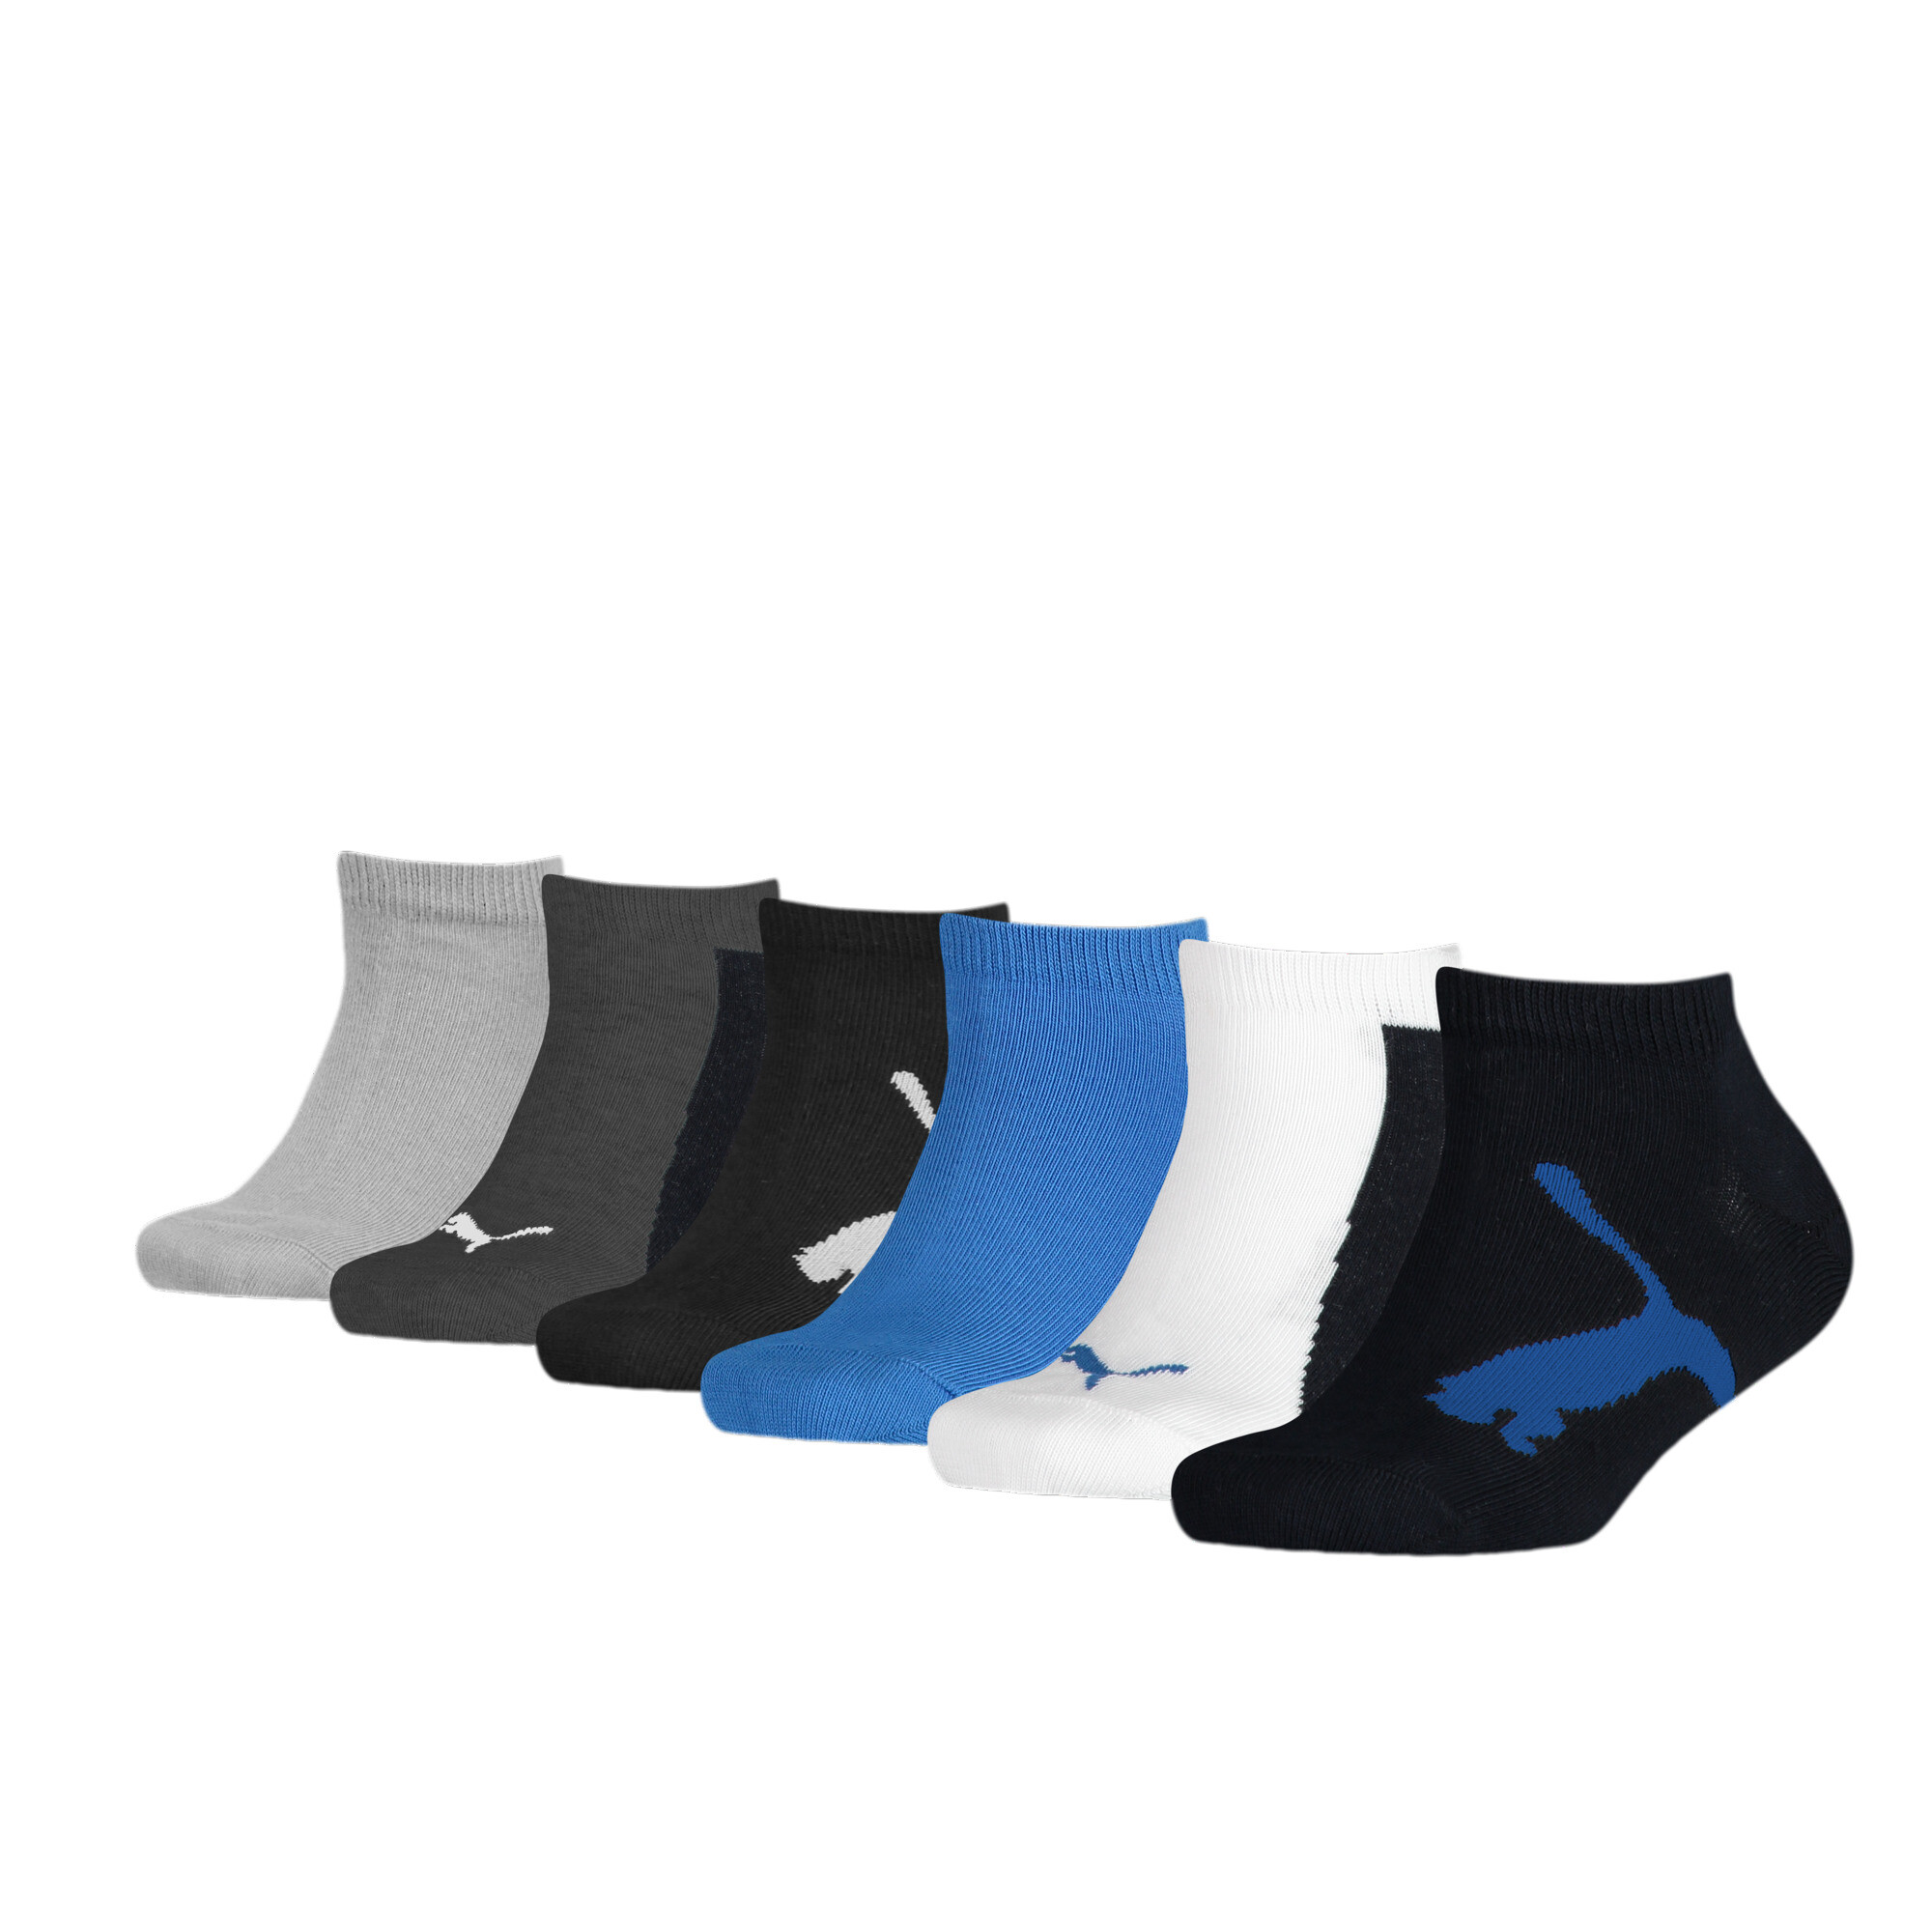 Puma Kids BWT Sneaker Socks 6 Pack, Blue, Size 27-30, Clothing